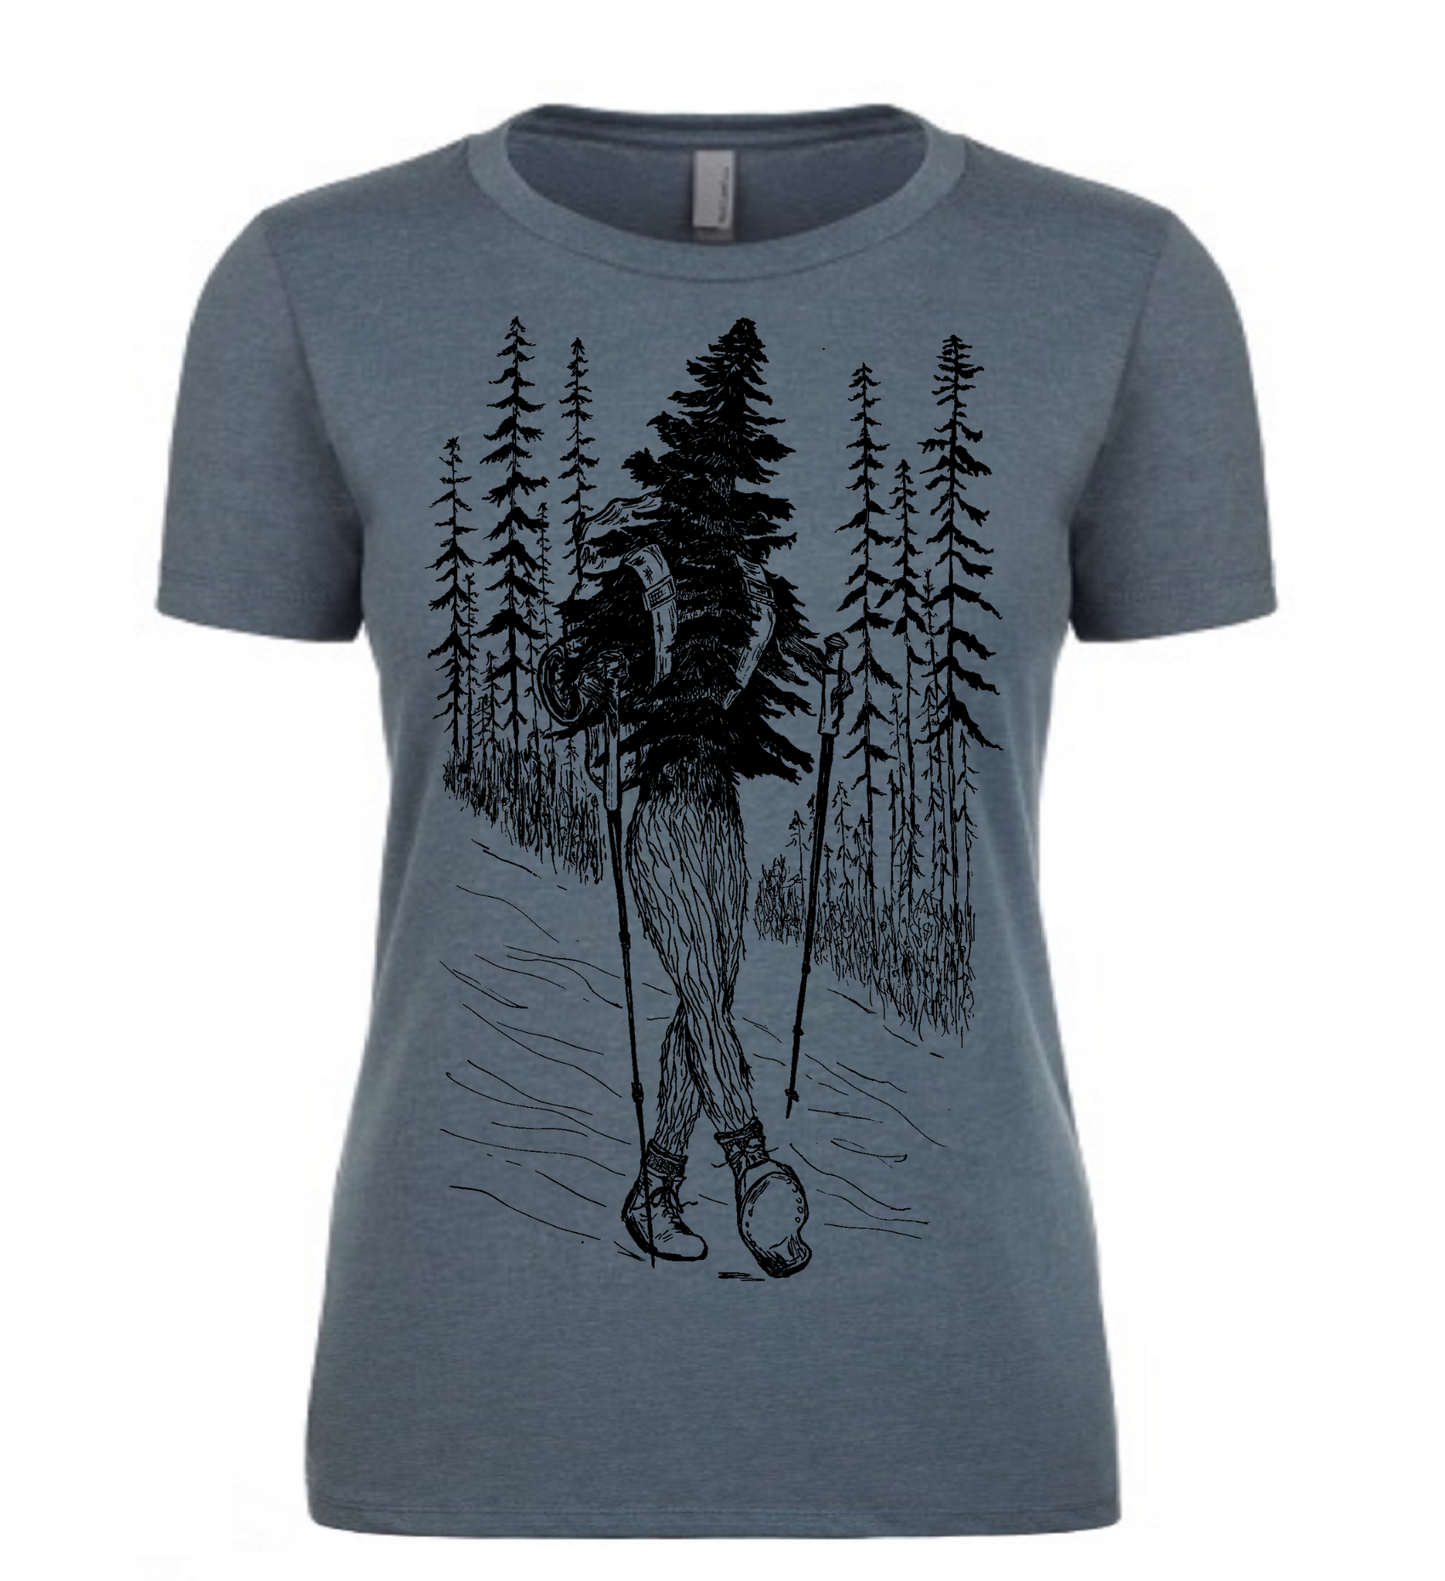 Hiking Tree Ladies T Shirt